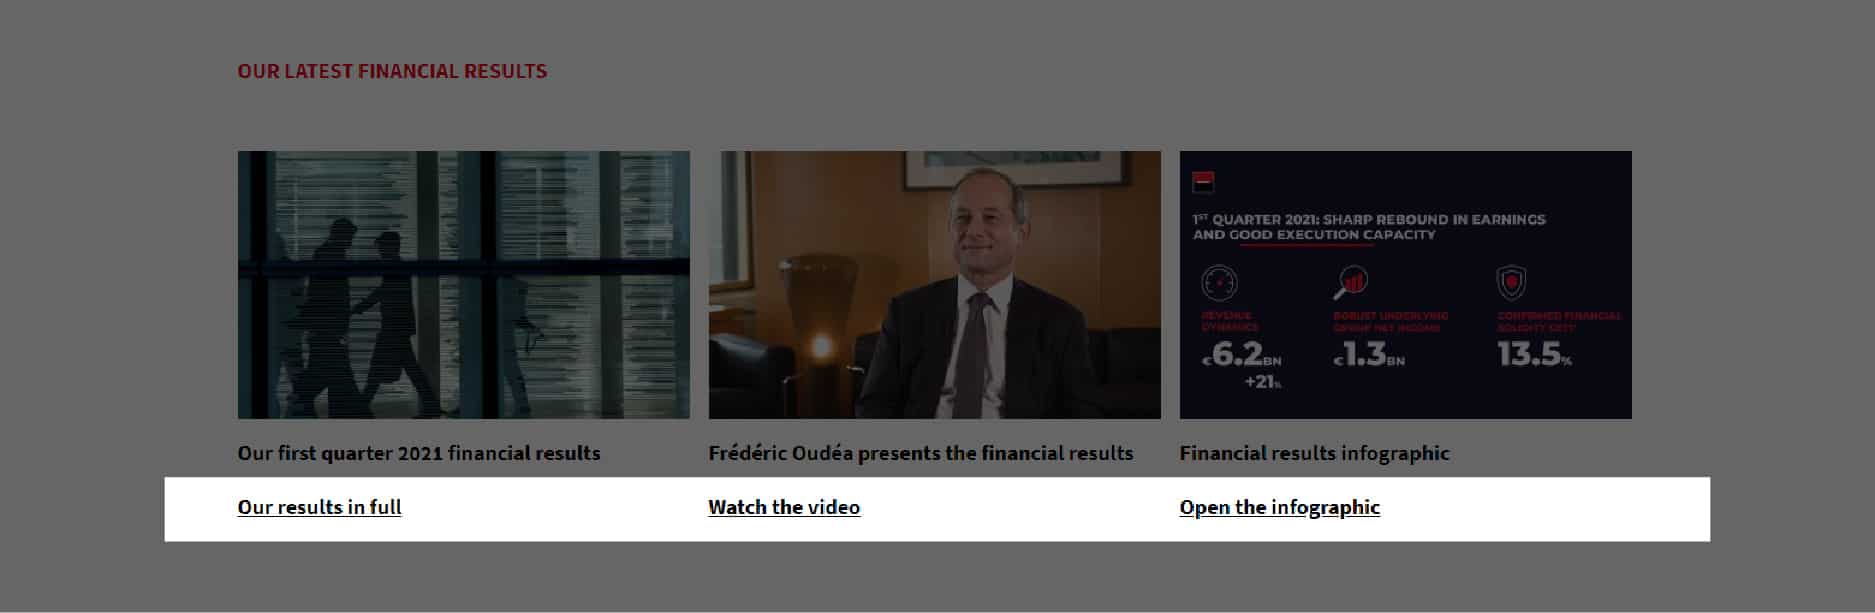 societe generale corporate website screenshot highlighting the CTA design